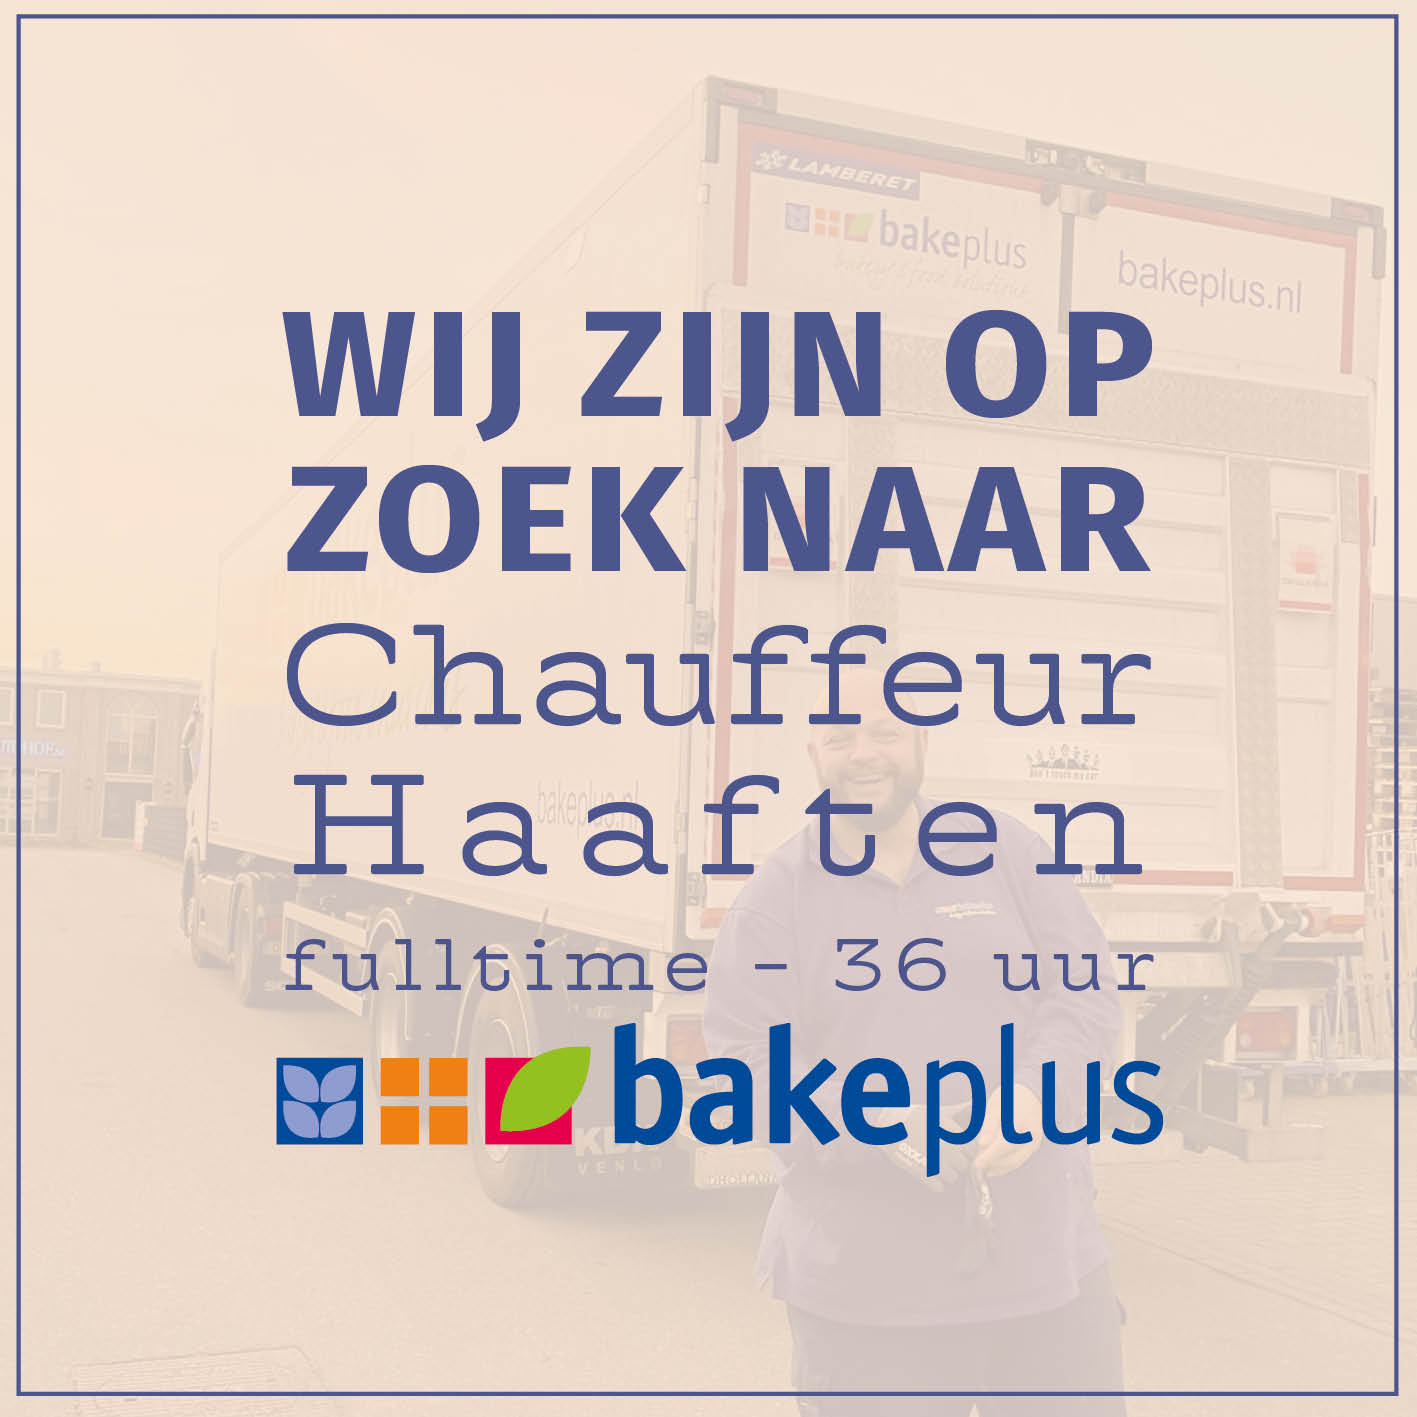 Bakeplus_vacature_chauffeur_Haaften_linkedin_2.jpg